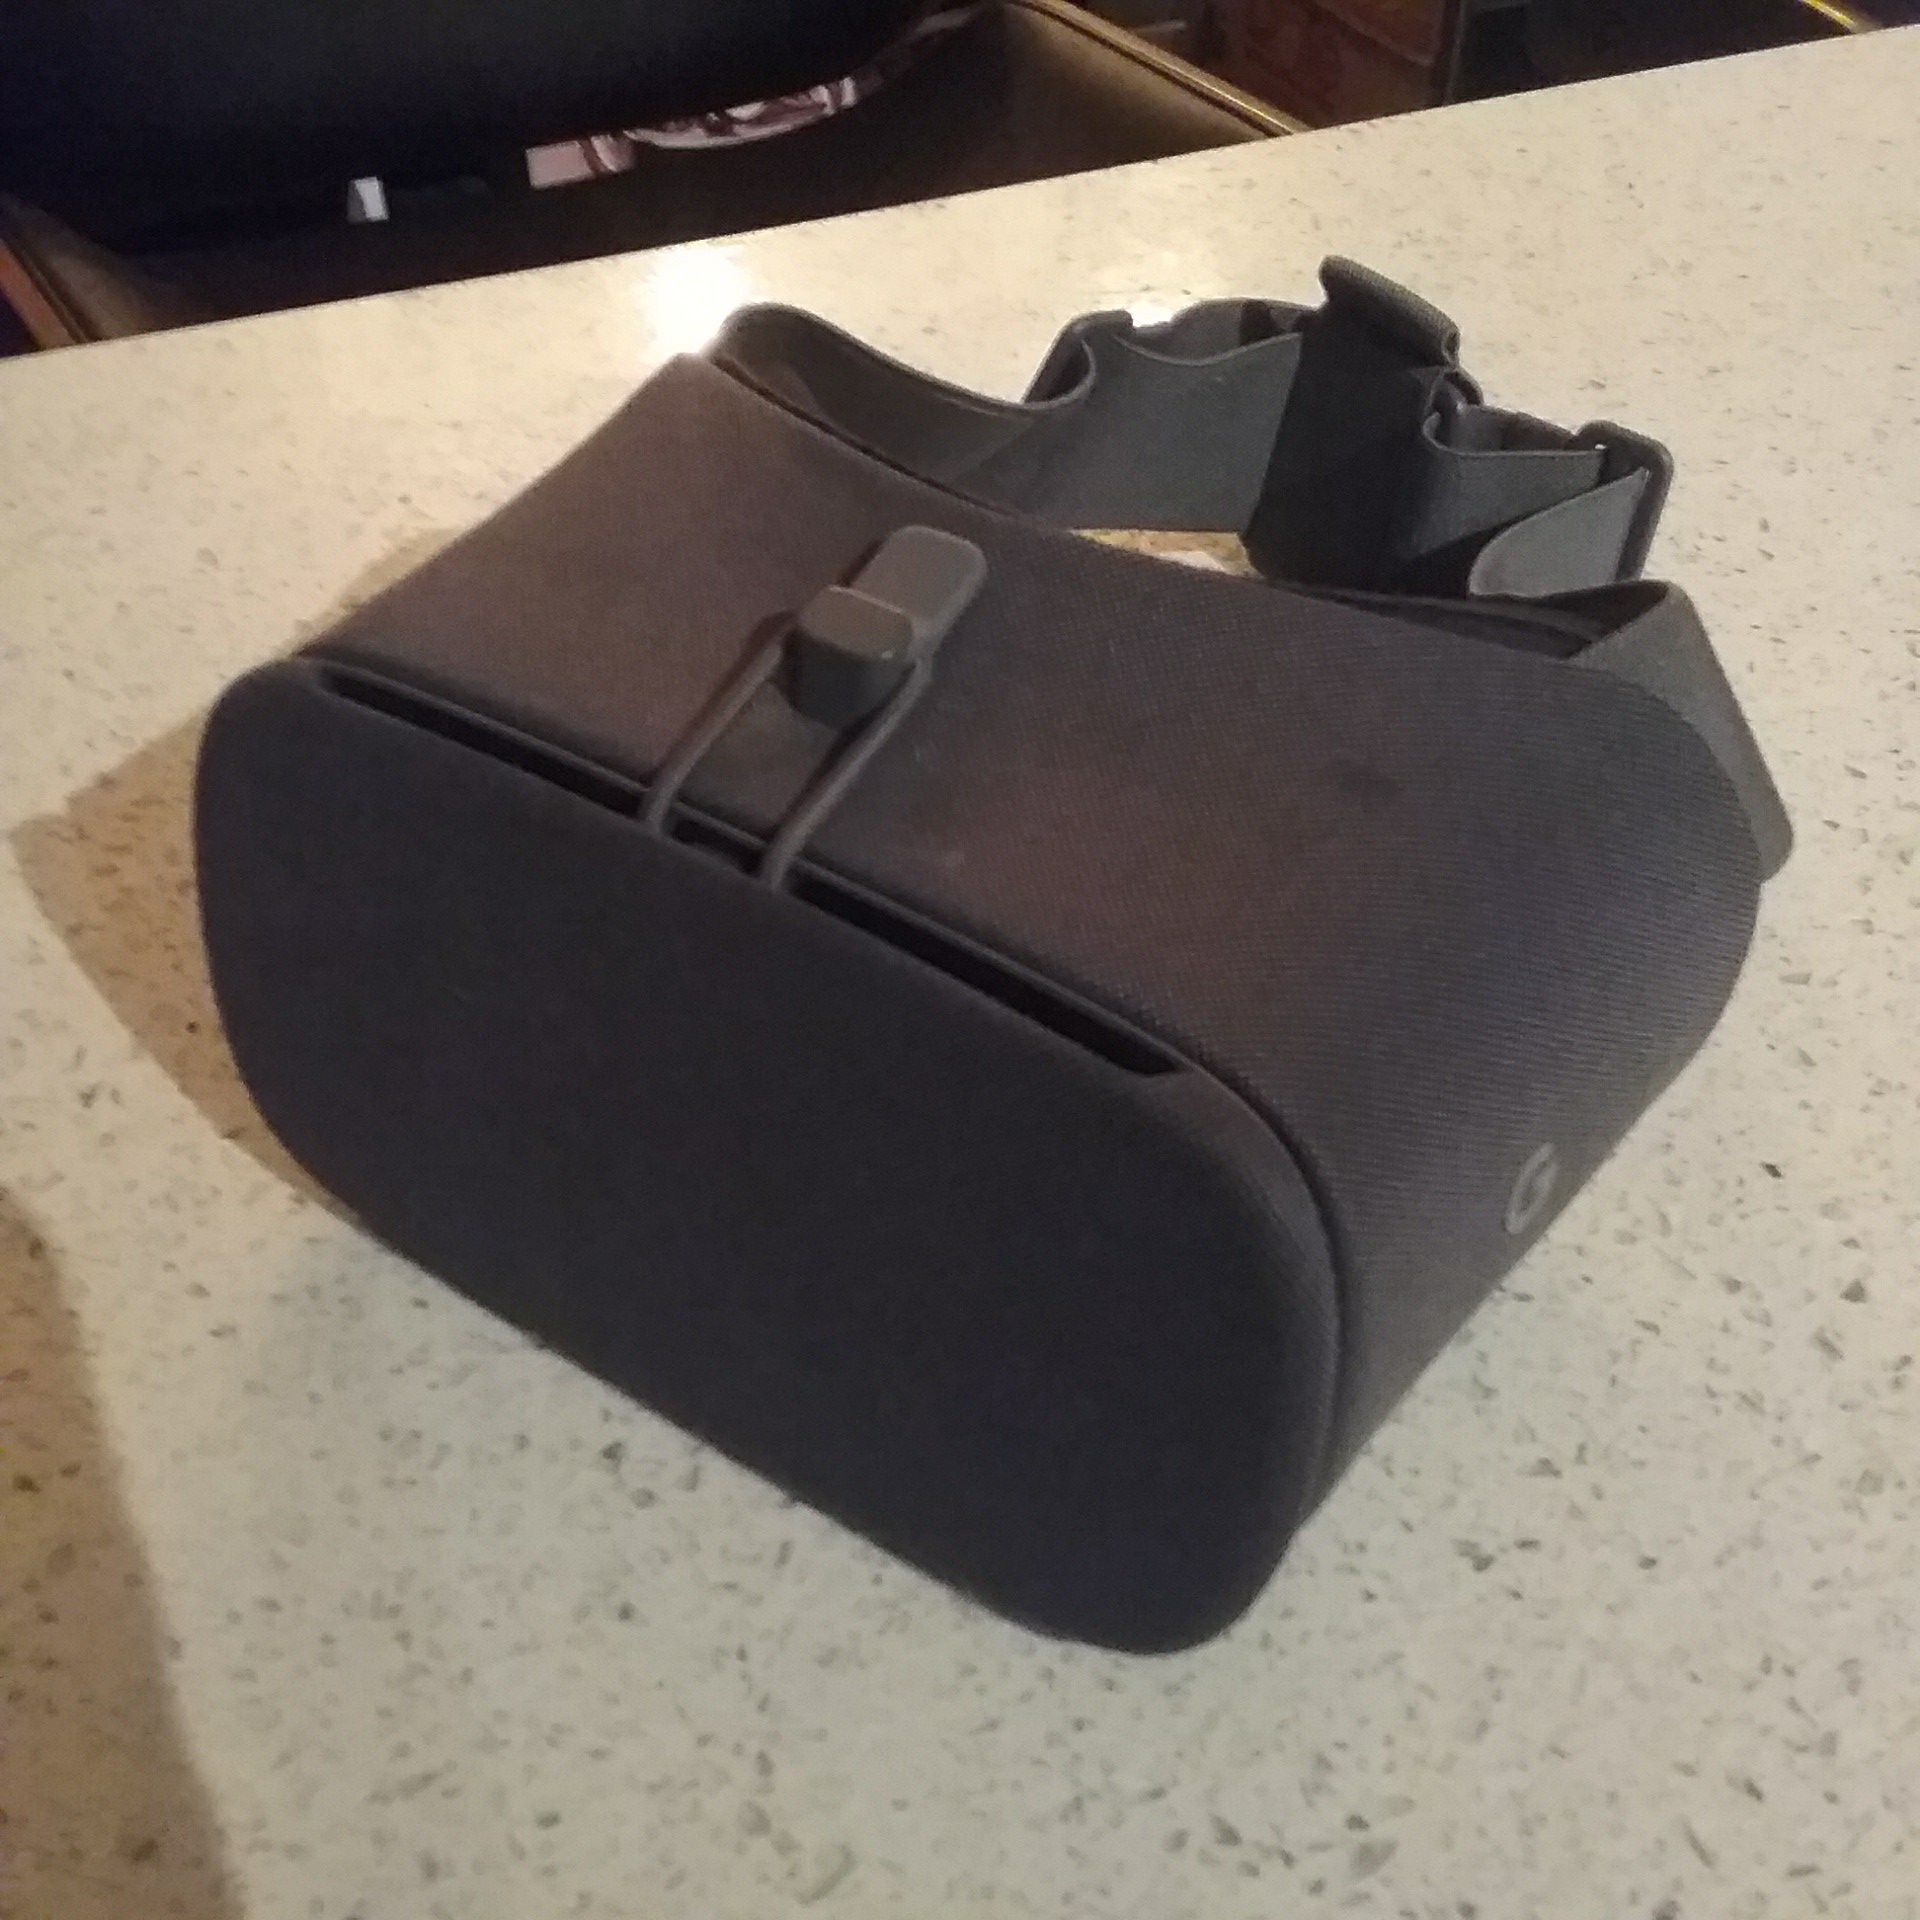 Google Daydream VR Headset